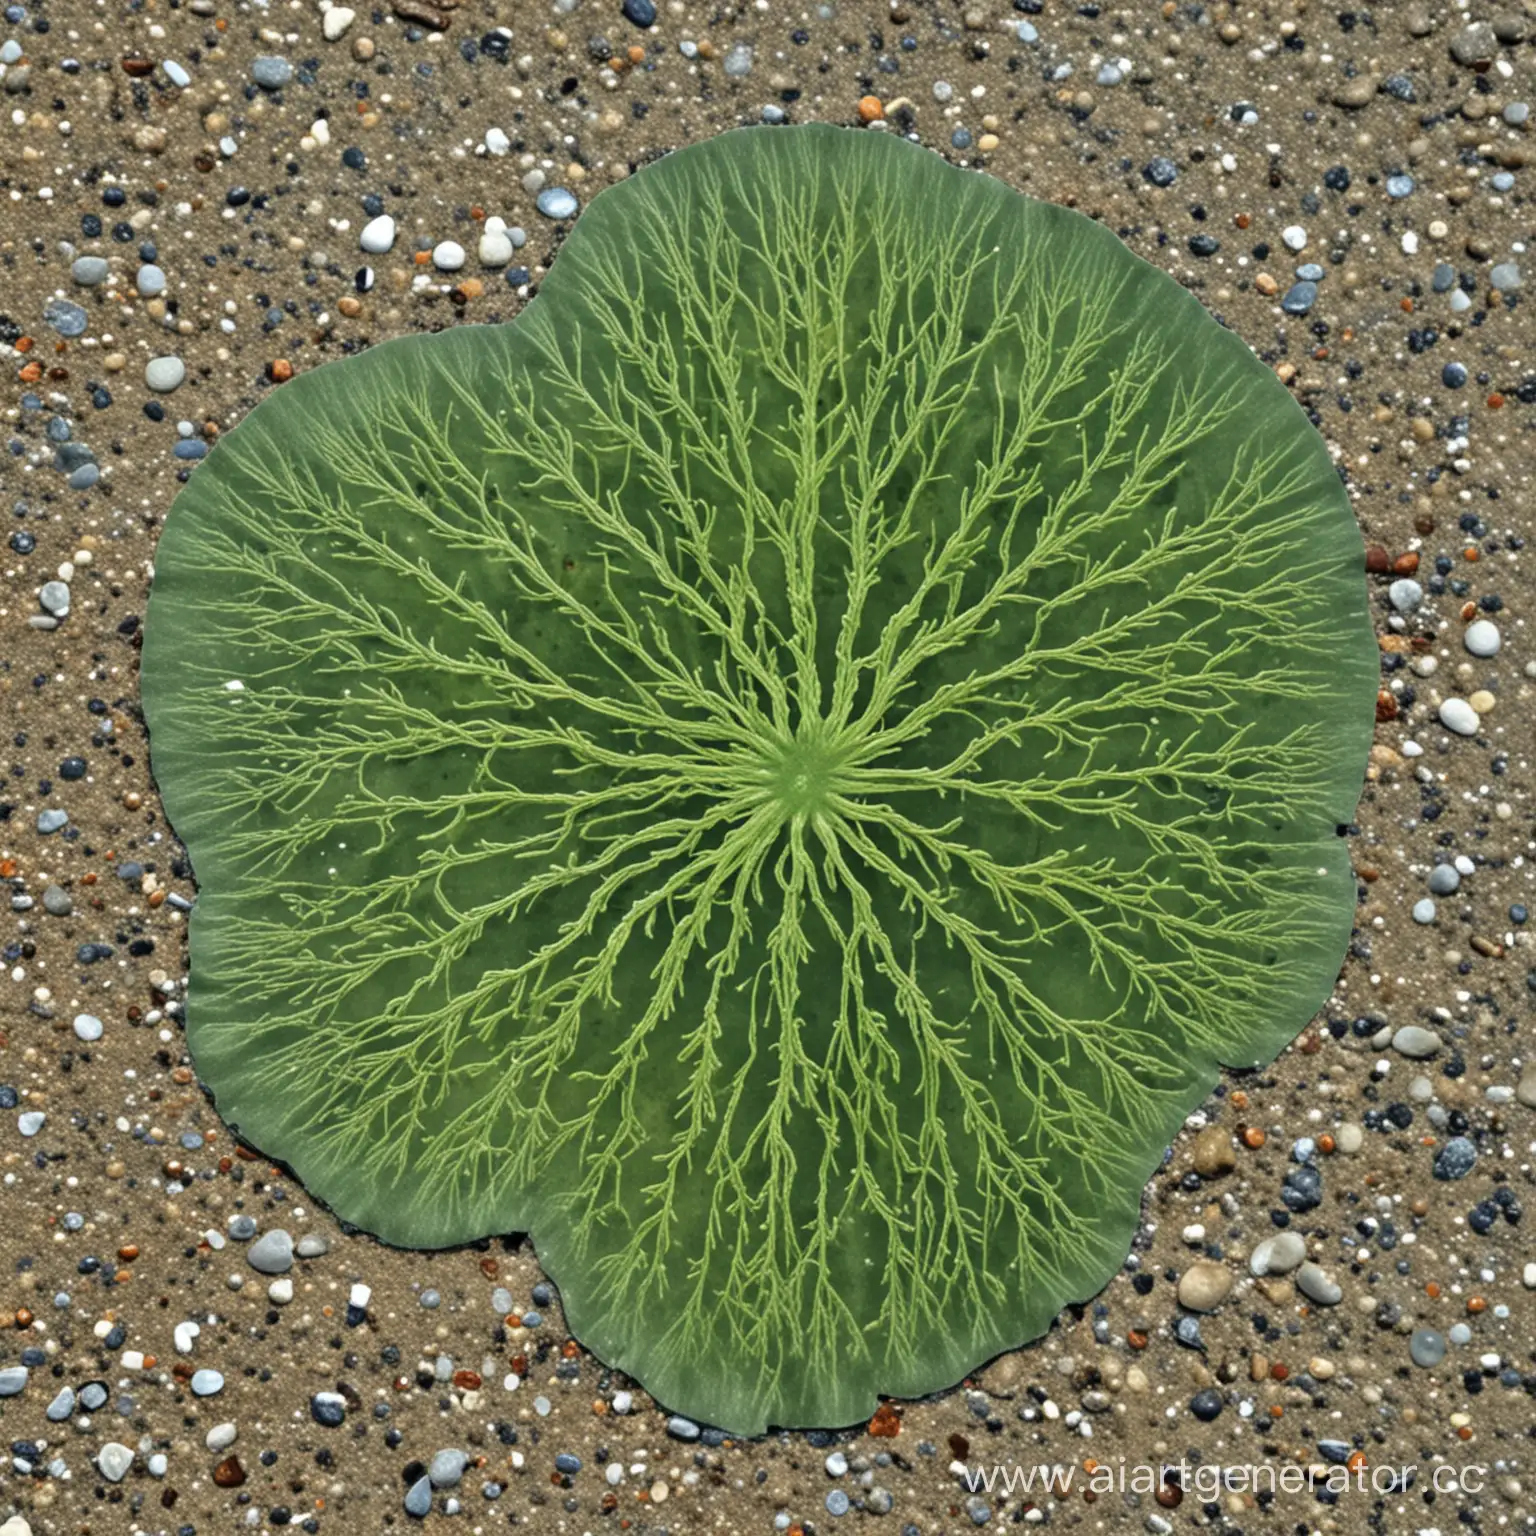 Vibrant-Dunaliella-Salina-Microscopic-Beauty-in-Unicellular-Algae